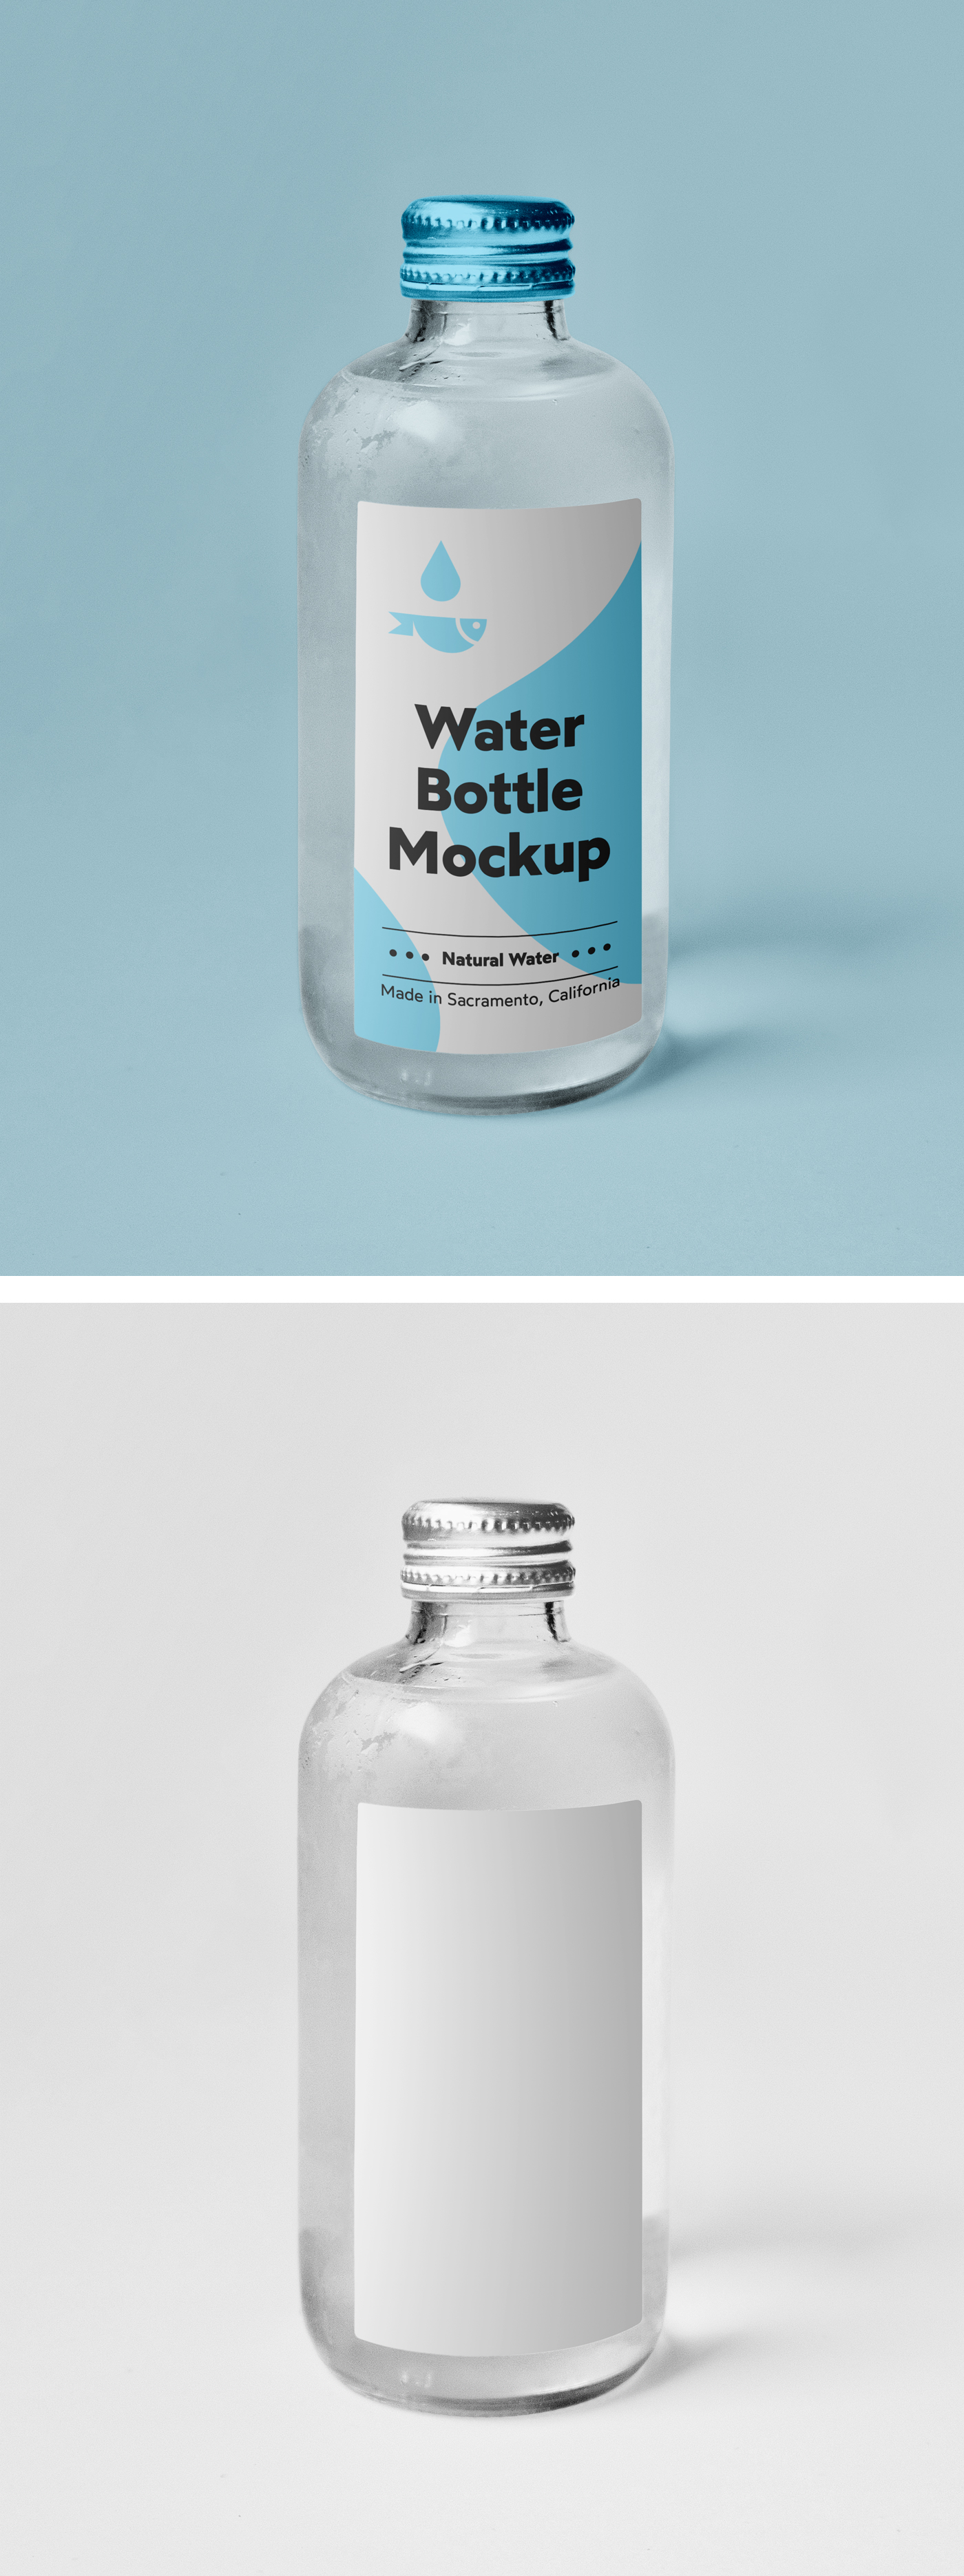 https://mrmockup.com/wp-content/uploads/2020/11/Mr.Mockup-02_Small-Glass-Bottle-Mockup.jpg?x55669